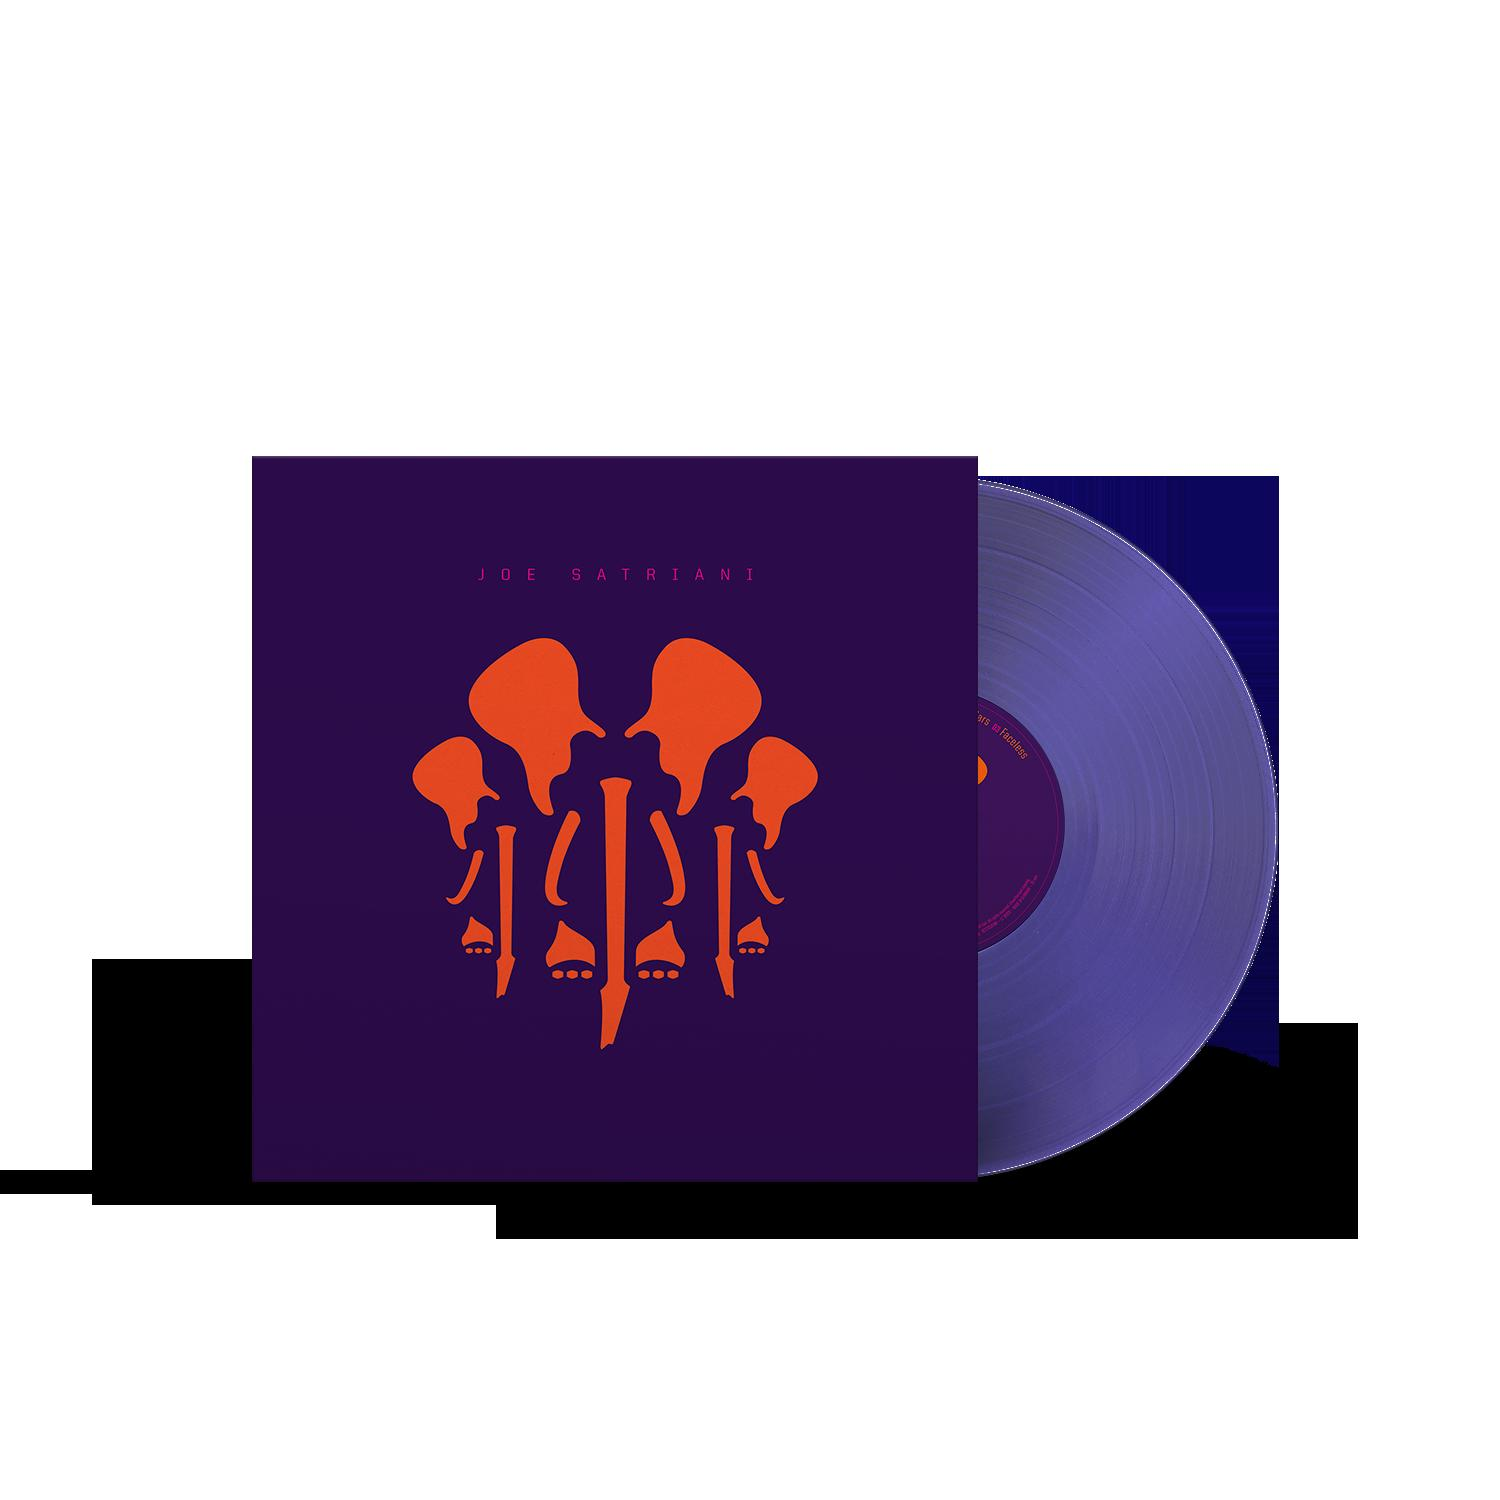 Joe Of Mars (Vinyl) (Ltd/180g/Gatefold/Purple) - The - Satriani Elephants